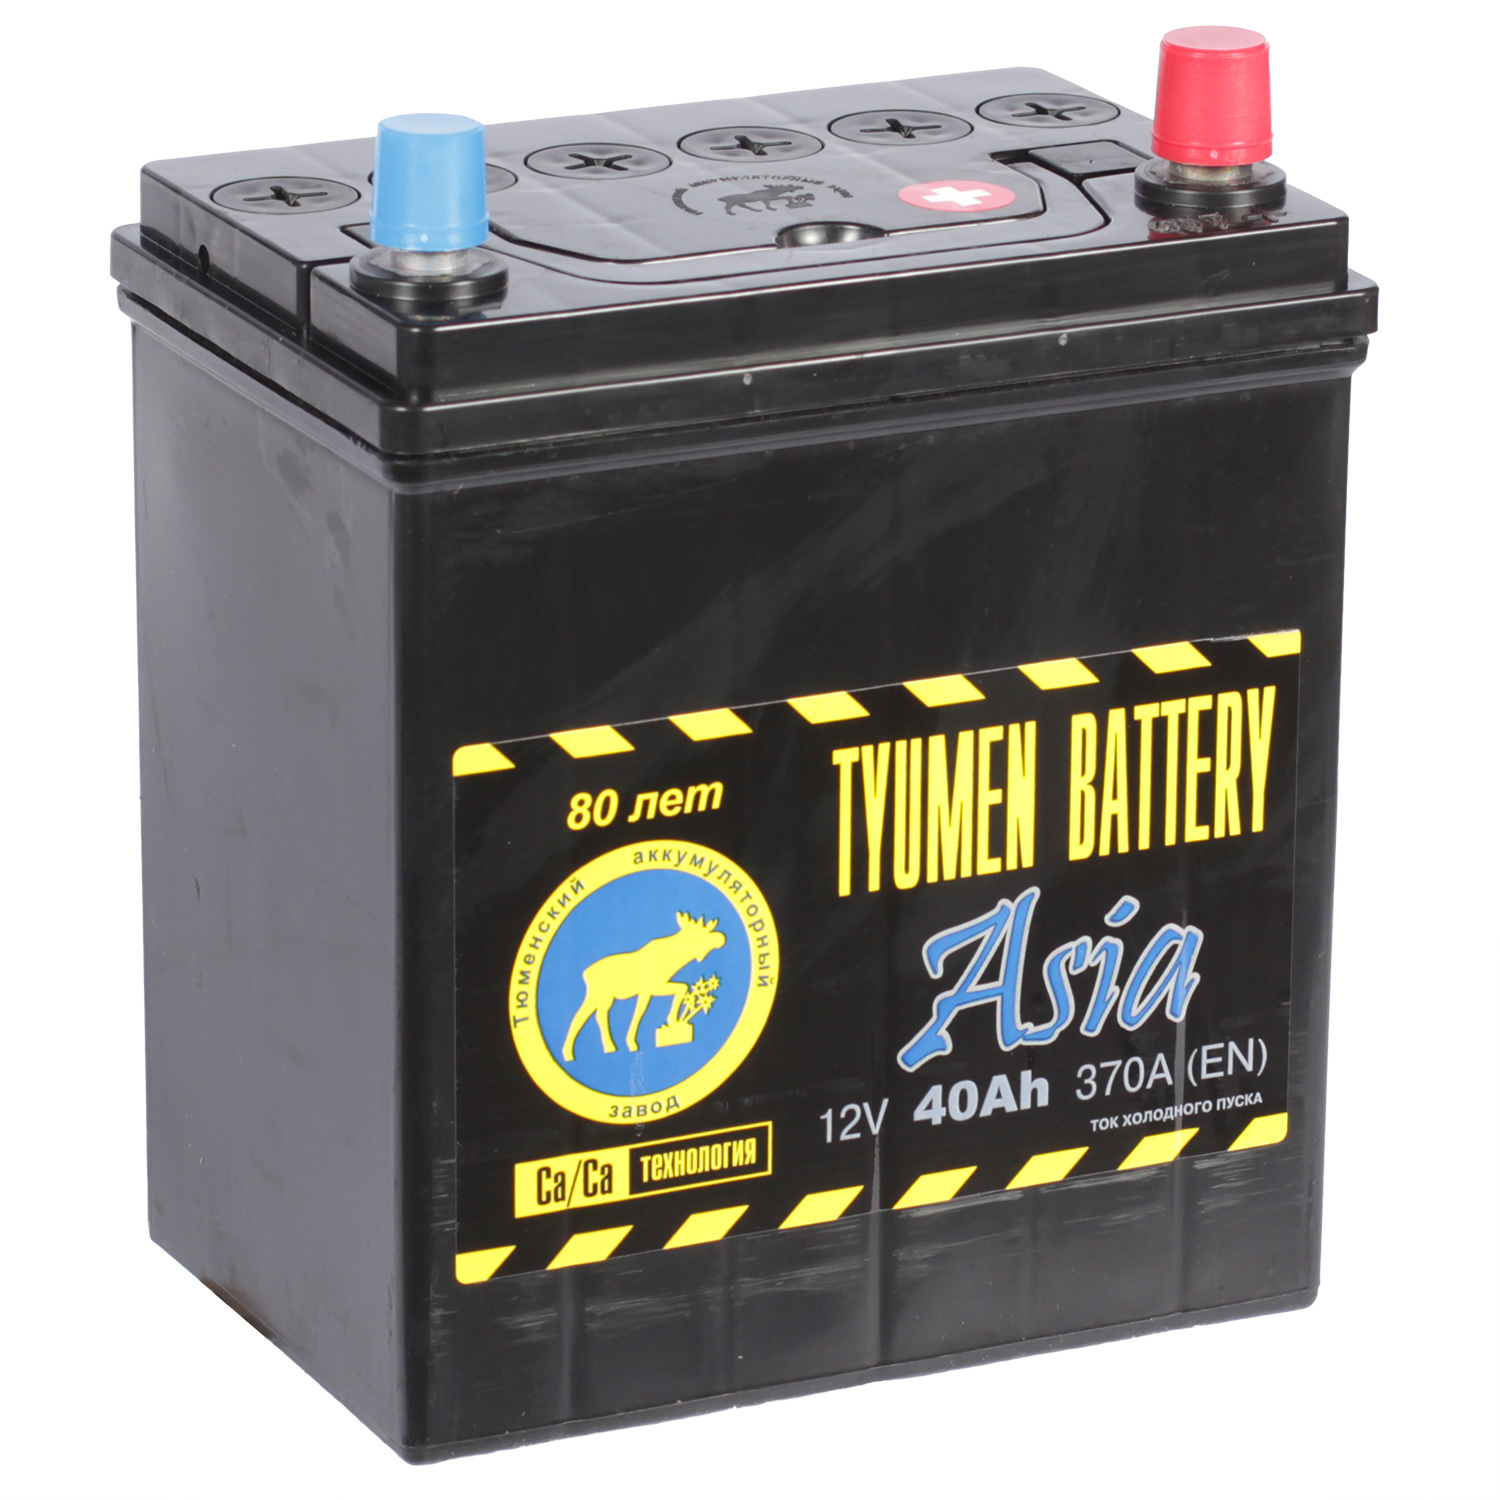 Tyumen Battery Автомобильный аккумулятор Tyumen Battery Asia 40 Ач обратная полярность B19L tyumen battery автомобильный аккумулятор tyumen battery 65 ач обратная полярность d23l